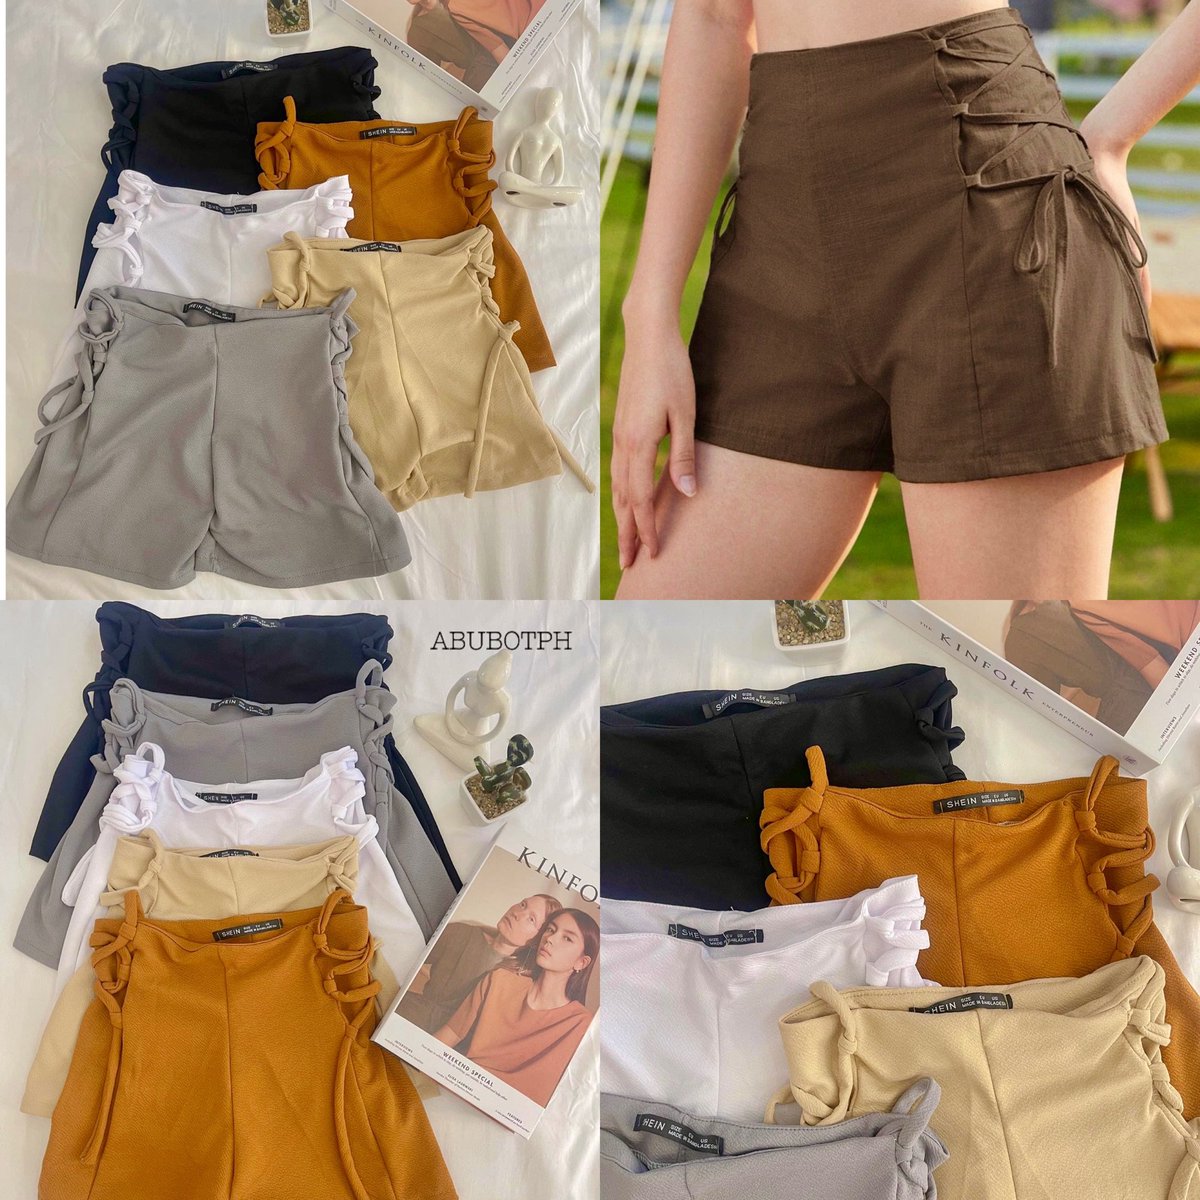 Side Crisscross Shorts
Click to shop: invol.co/clhq8jp
#BelowPhp100 #womenwear #womenshorts #lazadaaffiliate